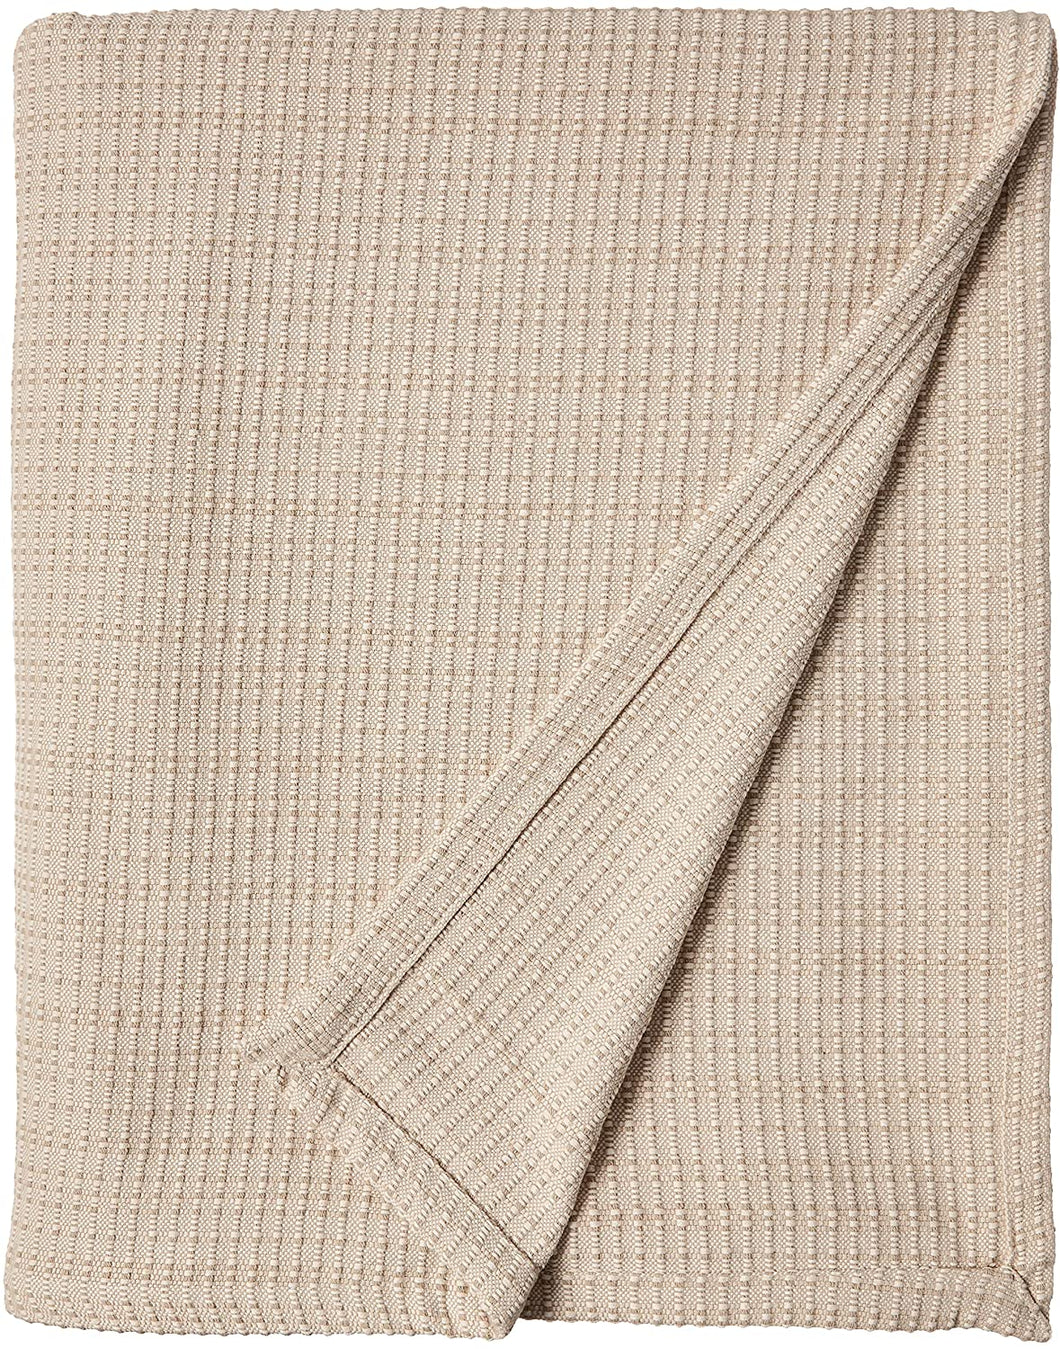 Tommy Bahama | Viscose Woven Cotton Blanket (King, Natural)